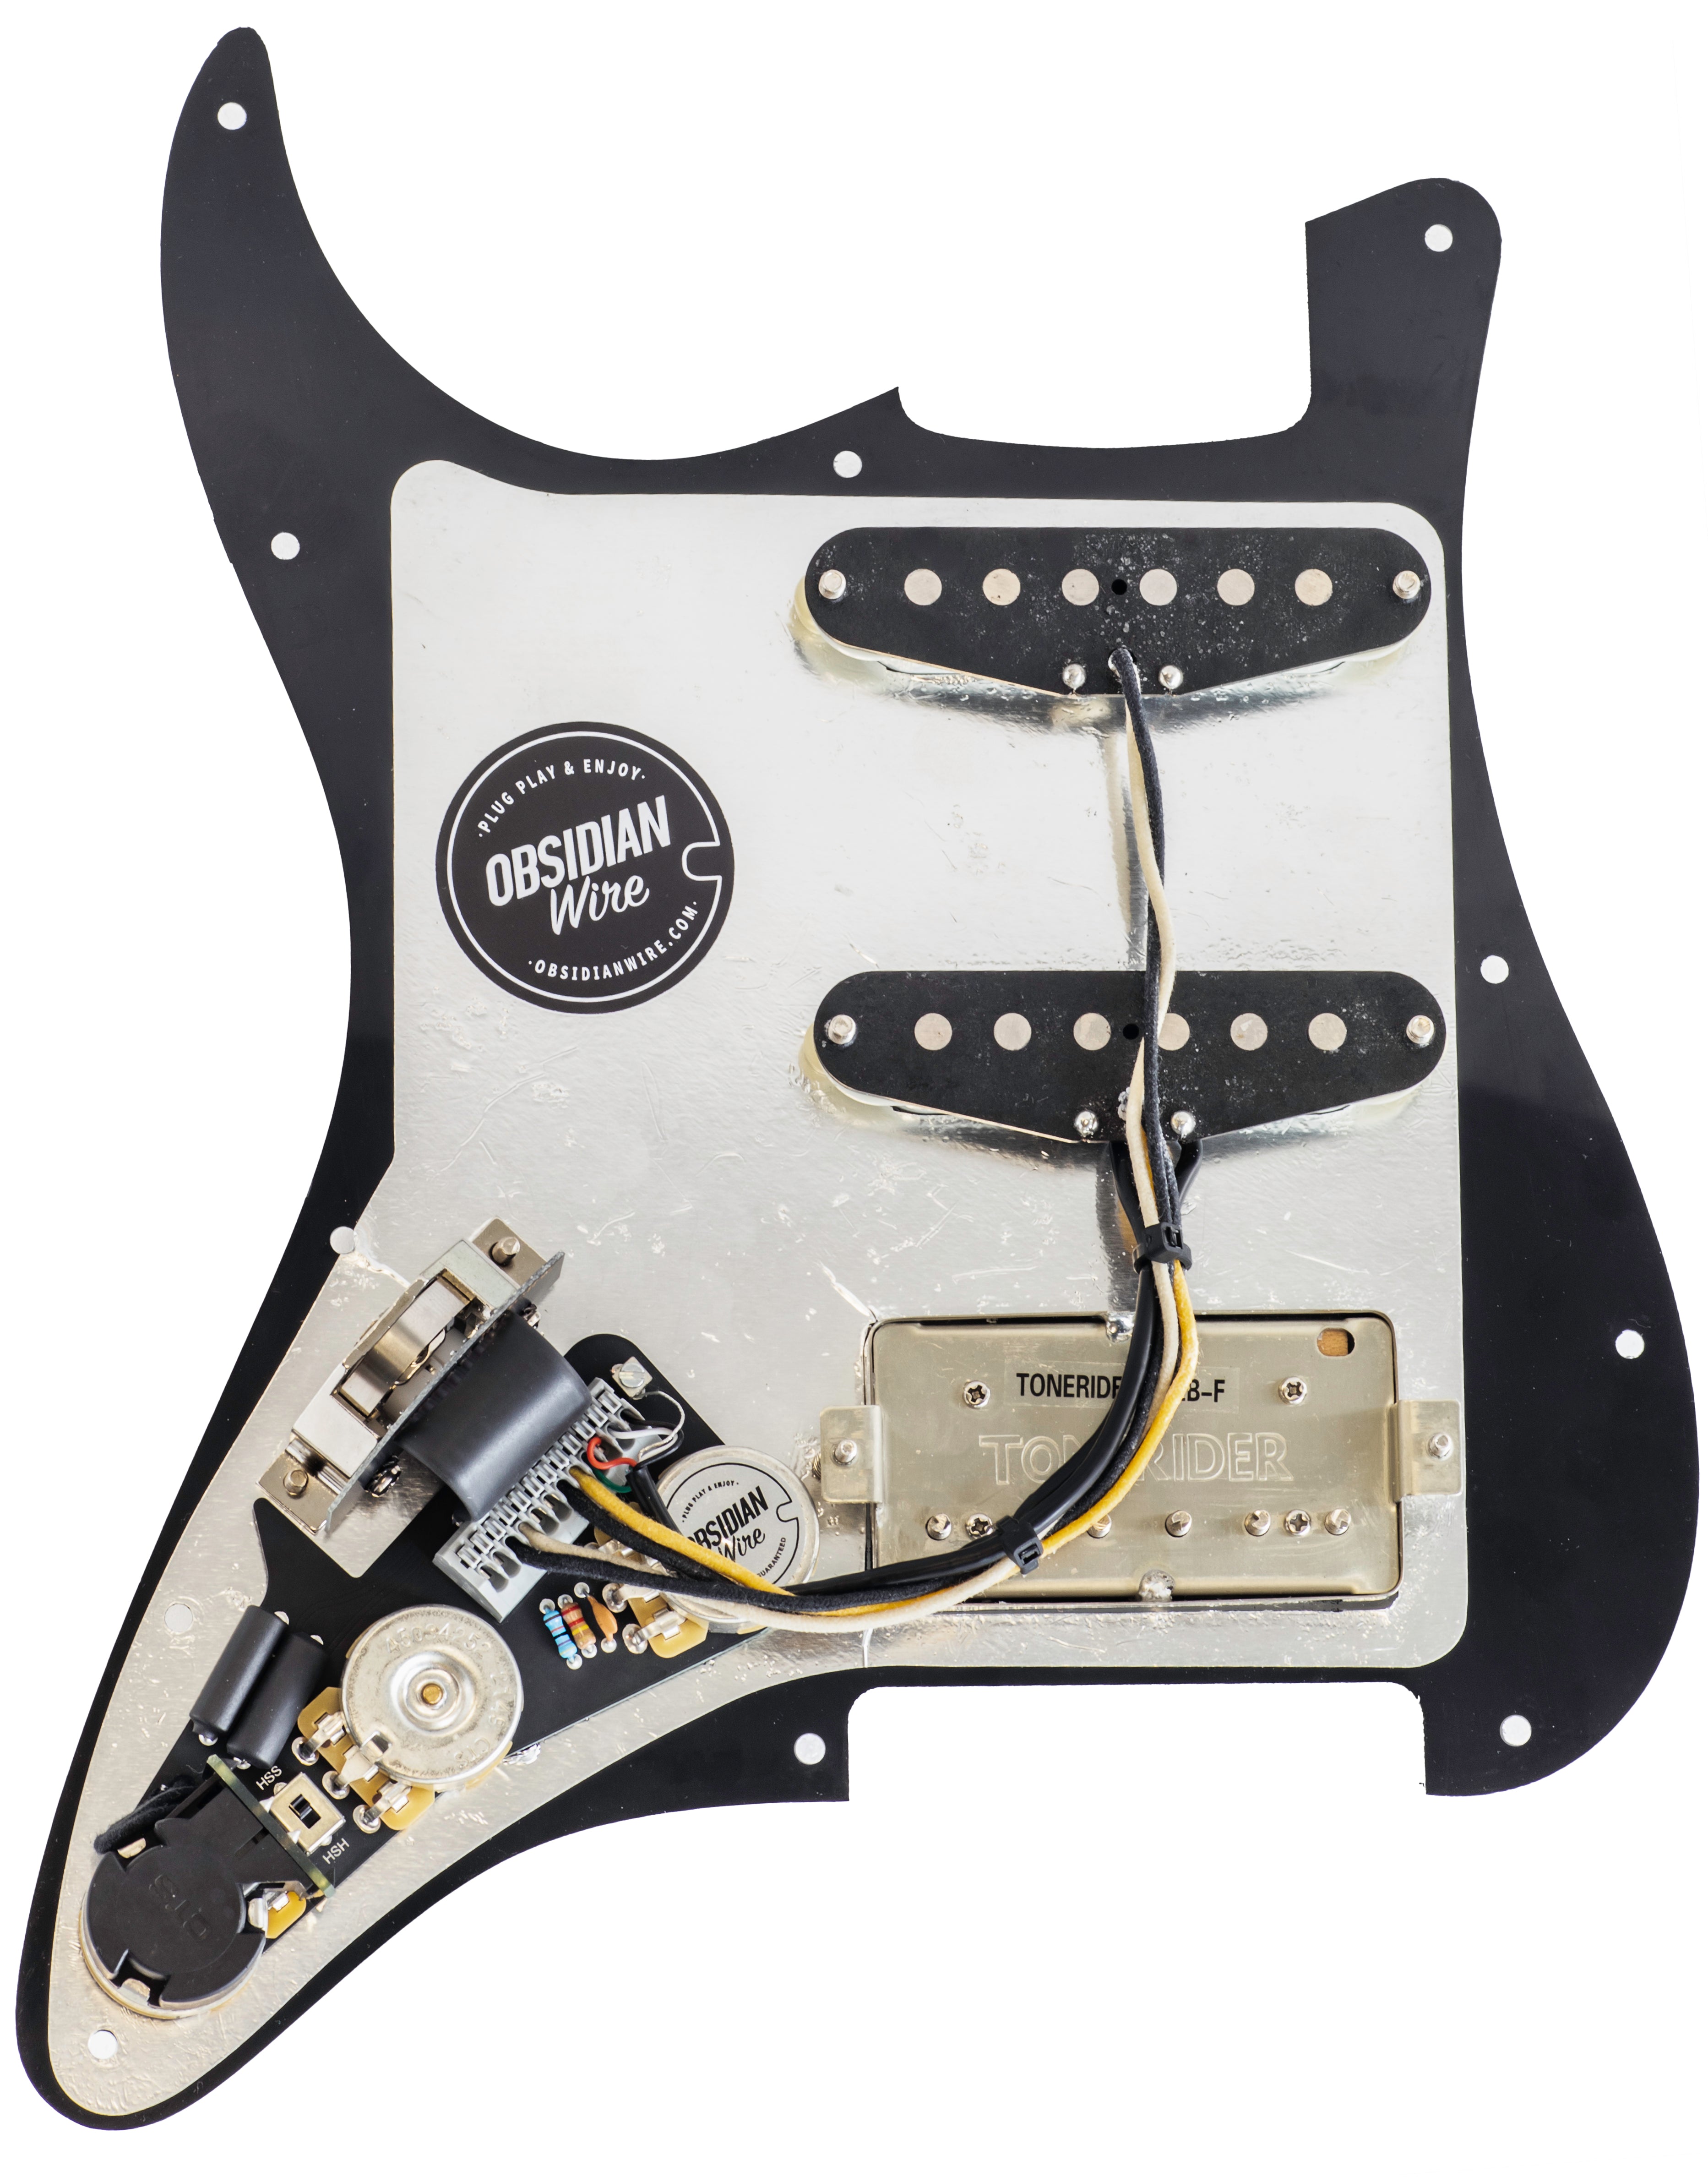 Custom Gilmour Black Strat Inspired Loaded Pickguard Assembly Package